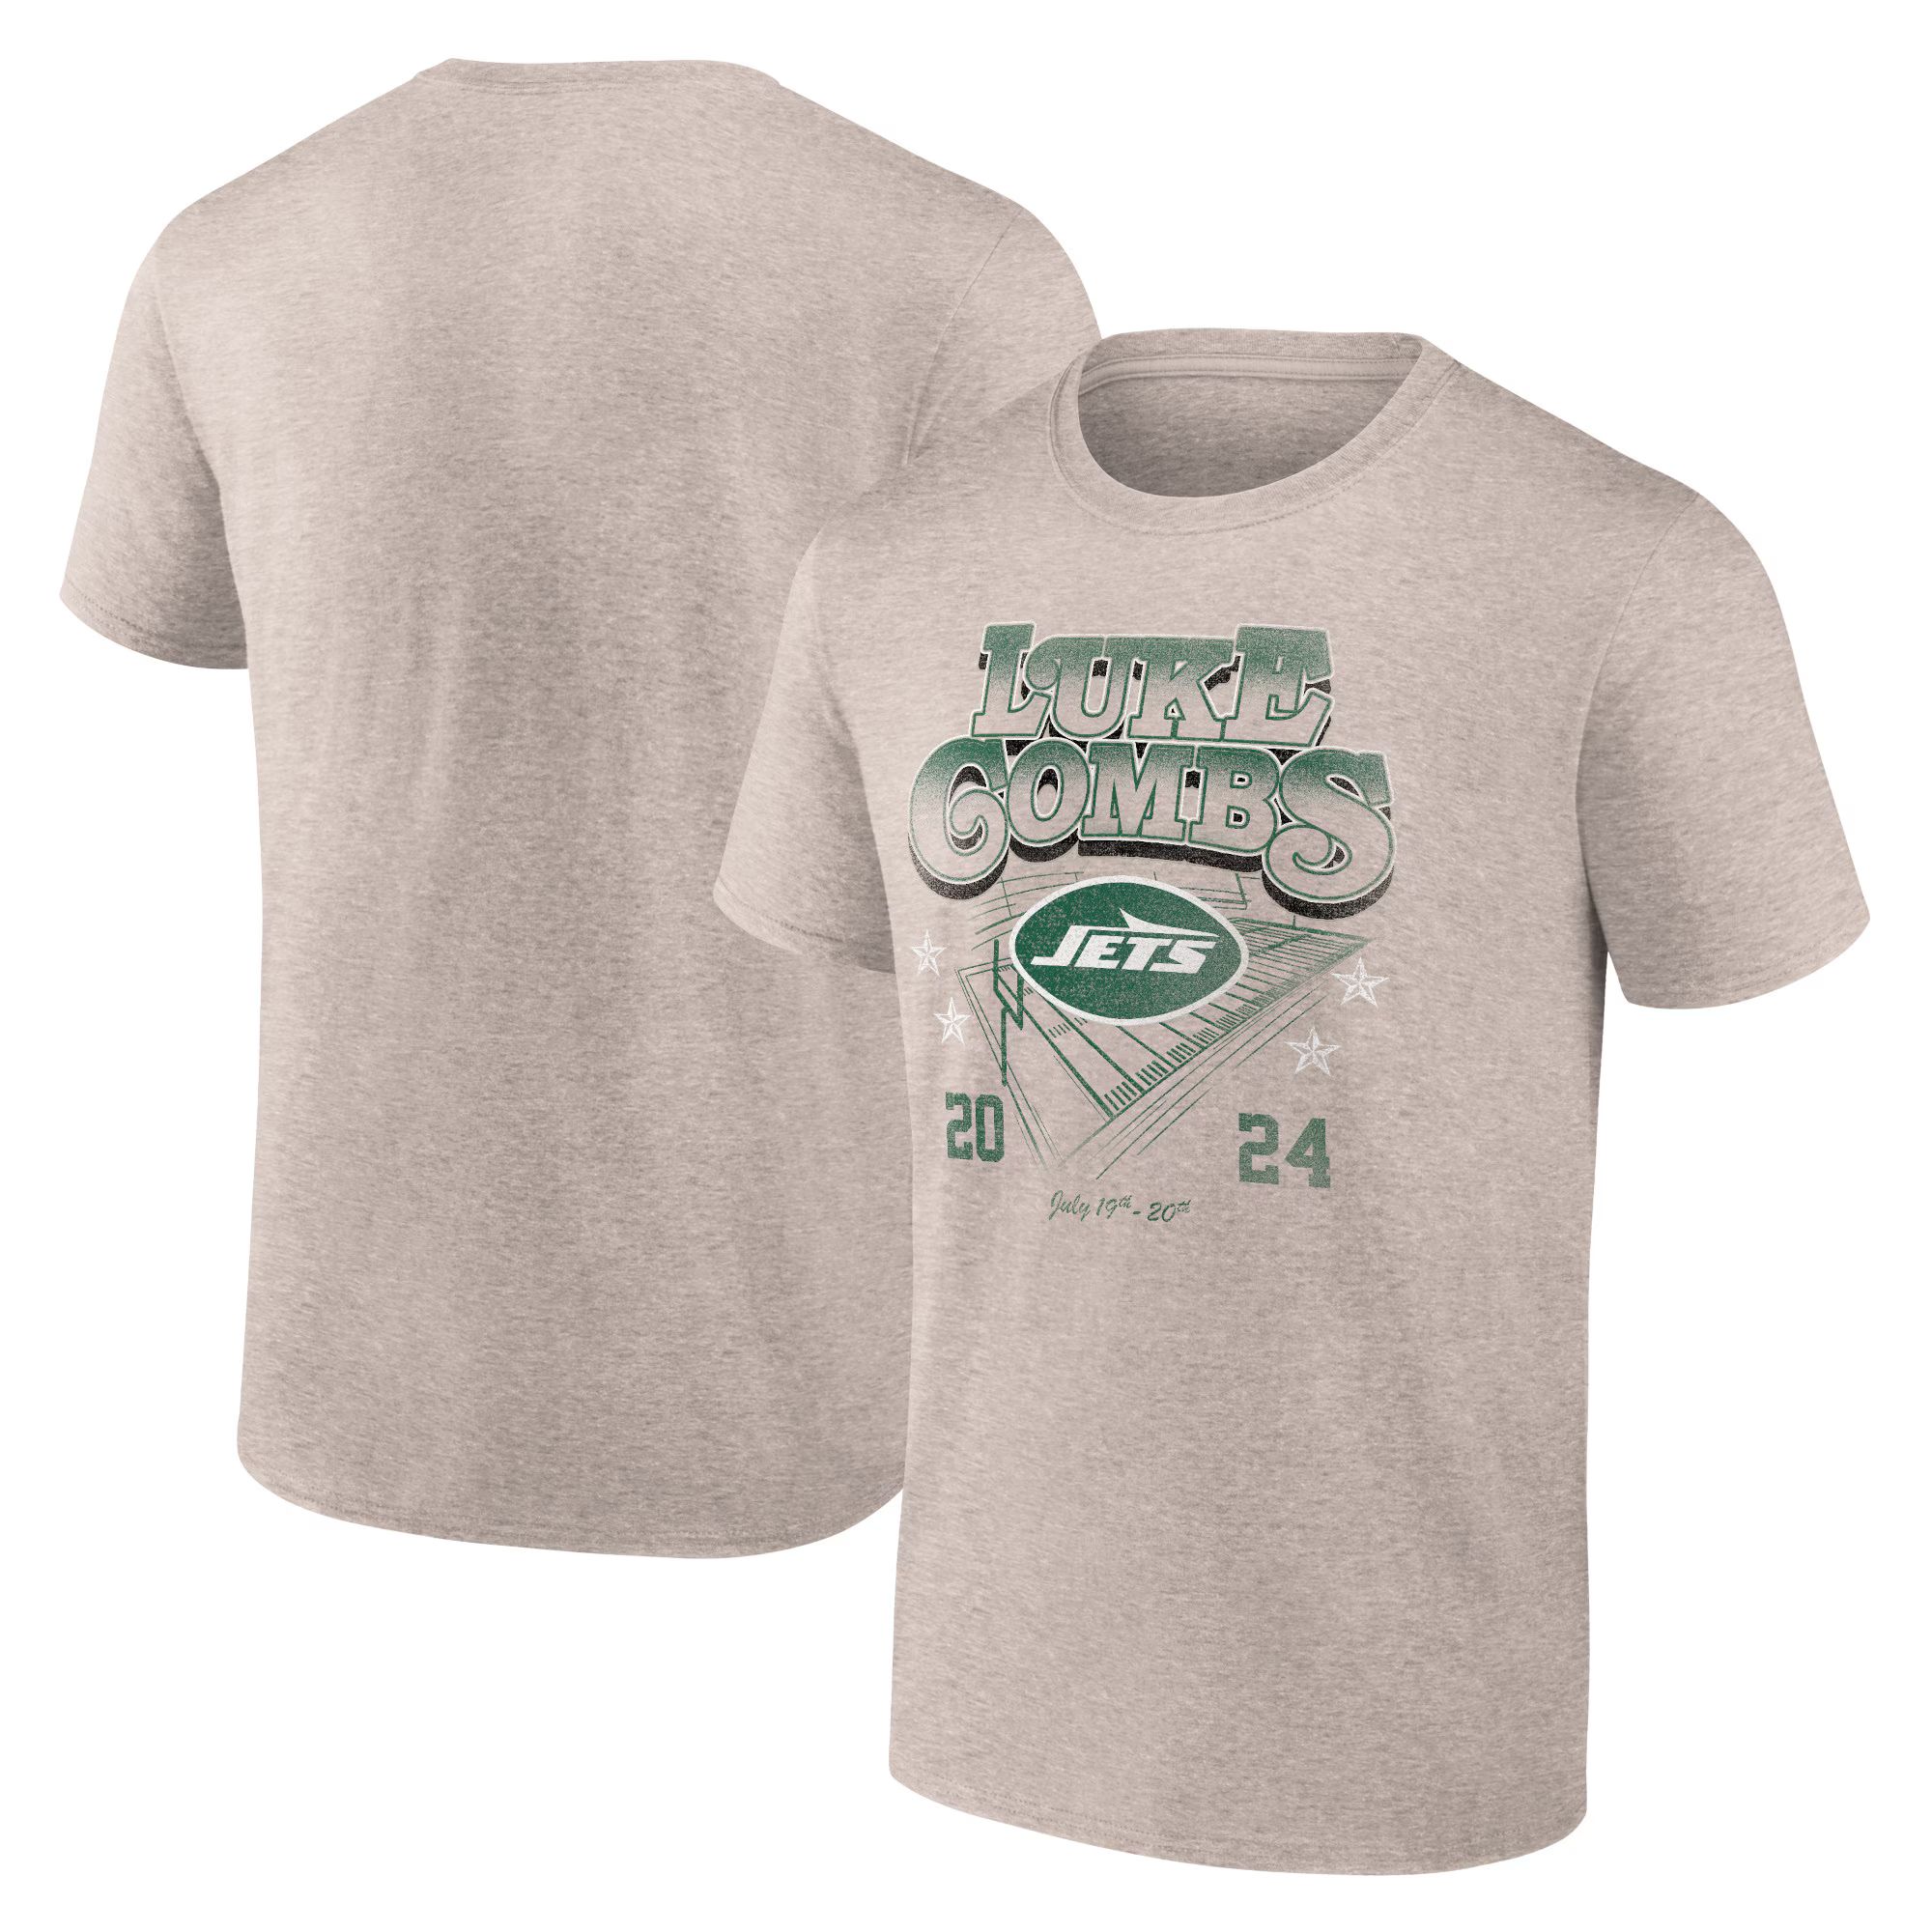 Luke Combs x New York Jets Fanatics Branded Growin' Up and Gettin' Old Tour T-Shirt - Tan | Fanatics